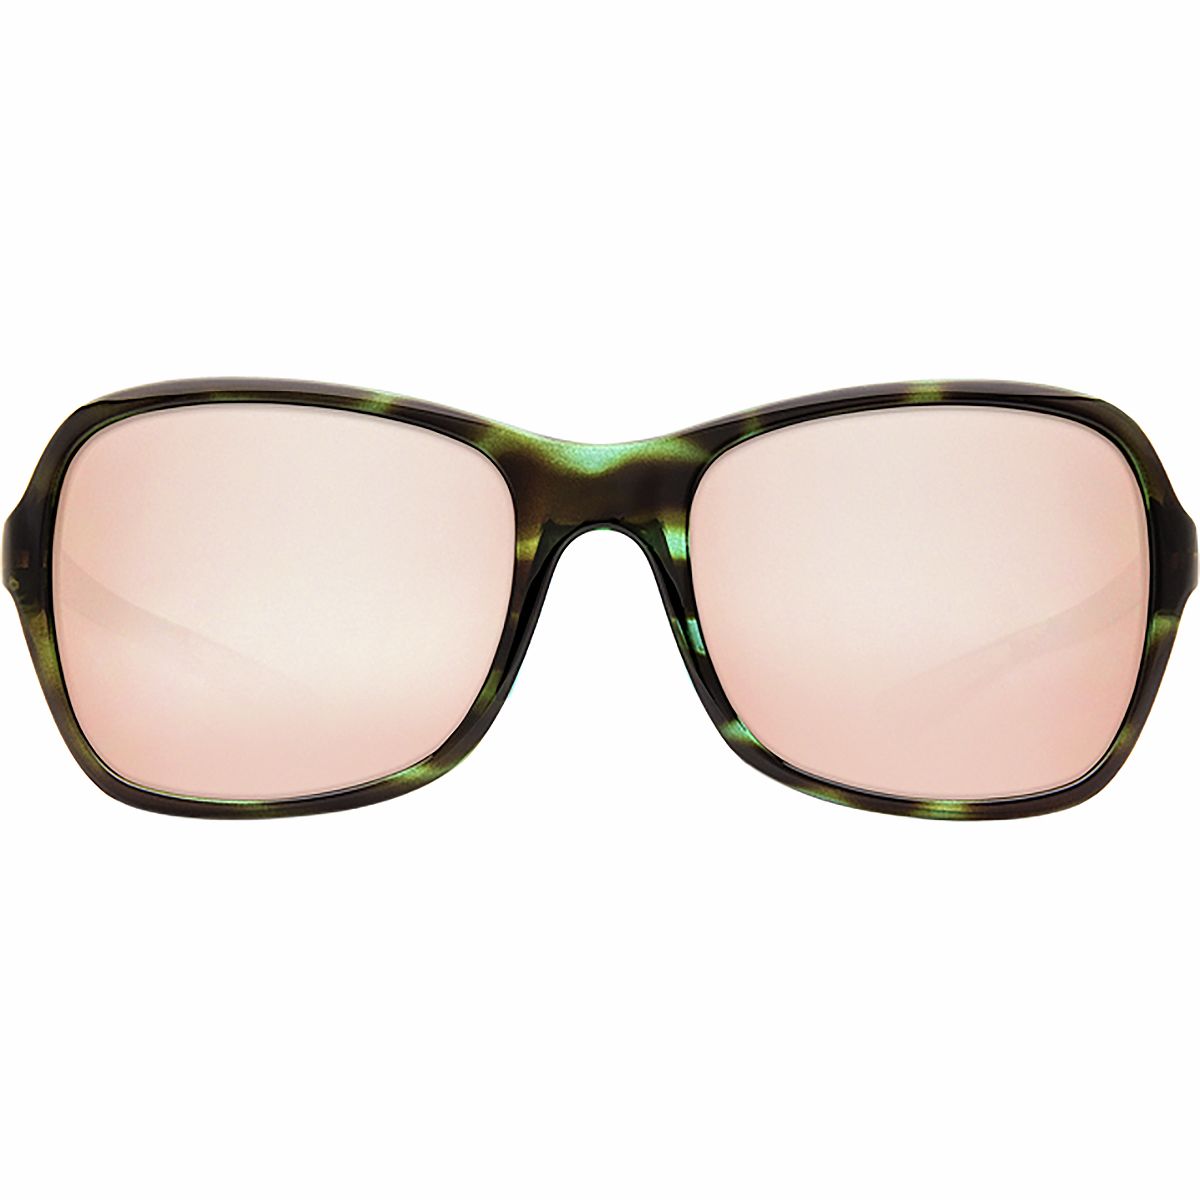 Oakley Polarized Sunglasses for Women